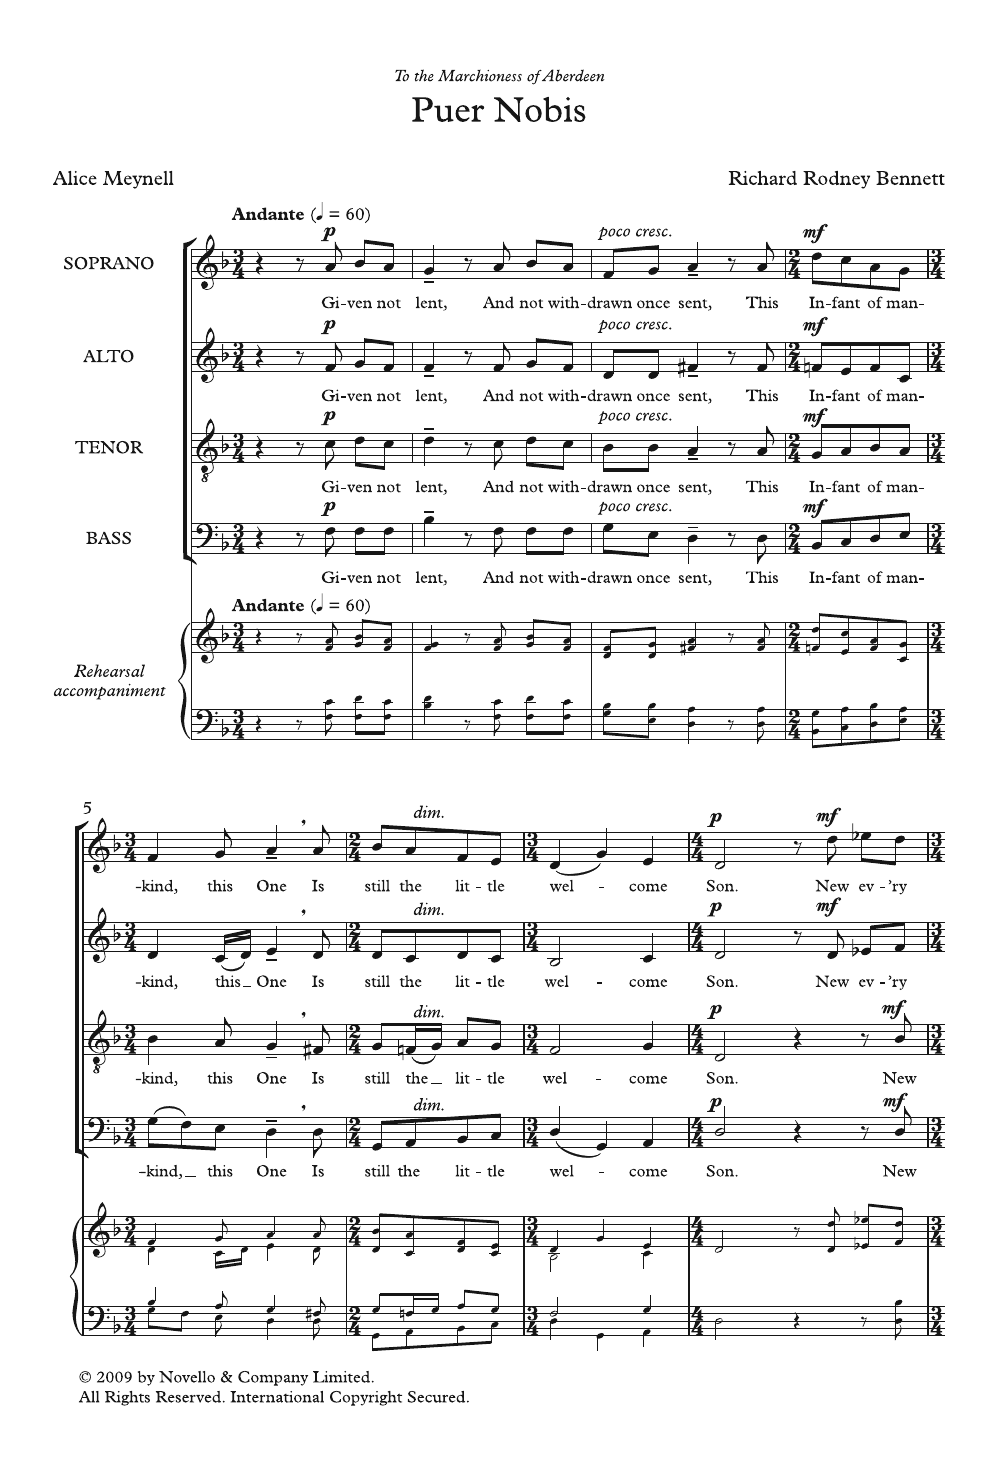 Richard Rodney Bennett Puer Nobis Sheet Music Notes & Chords for Choir - Download or Print PDF